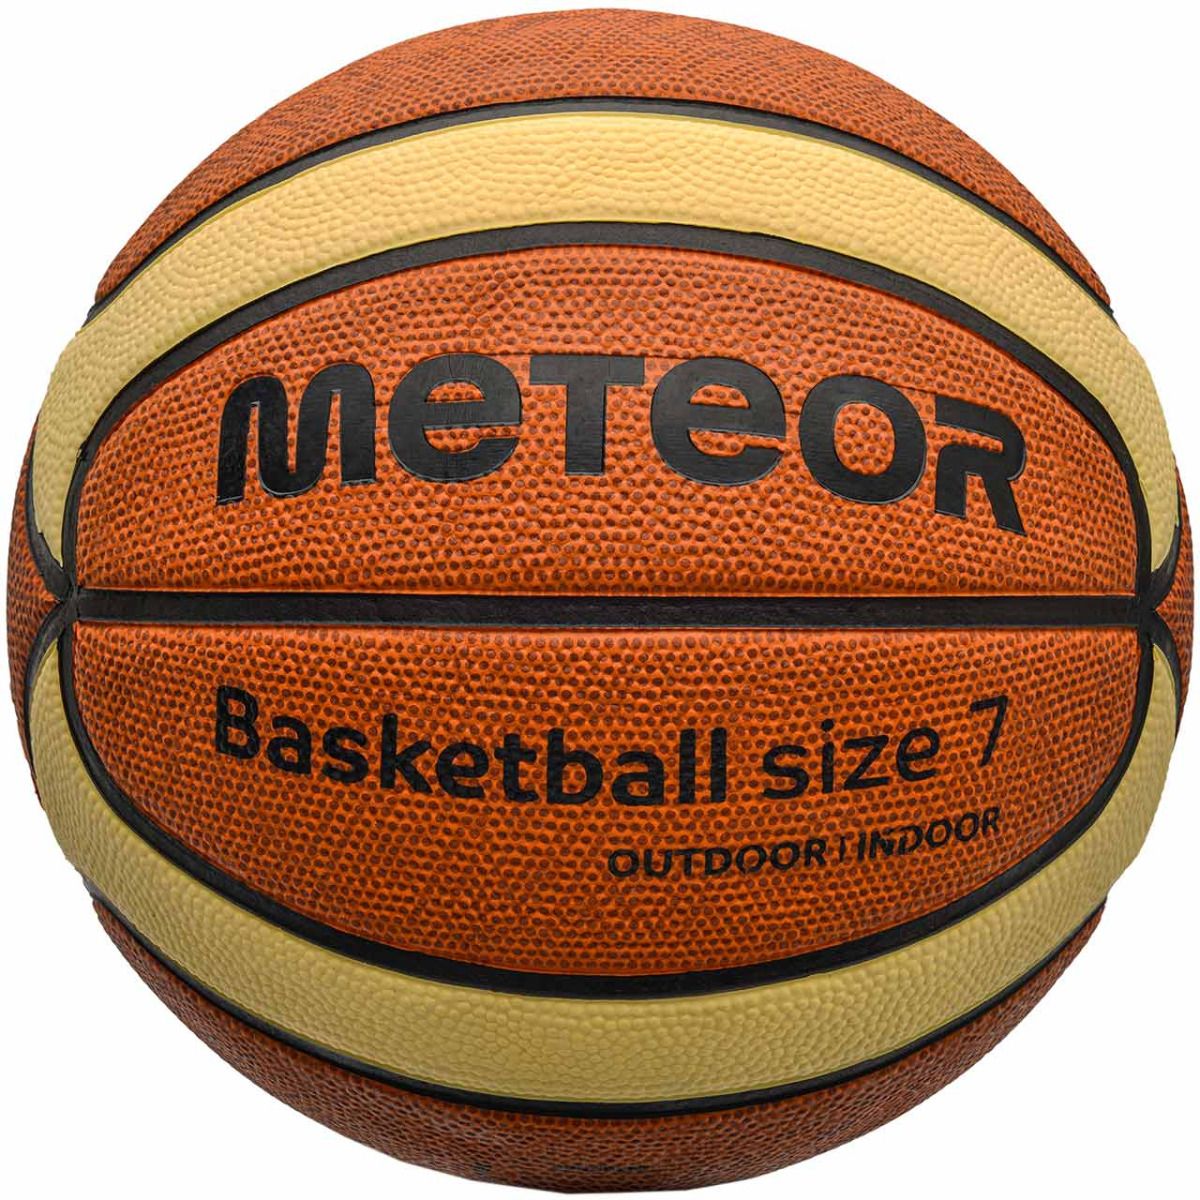 Meteor Basketball Cellular 7 10102